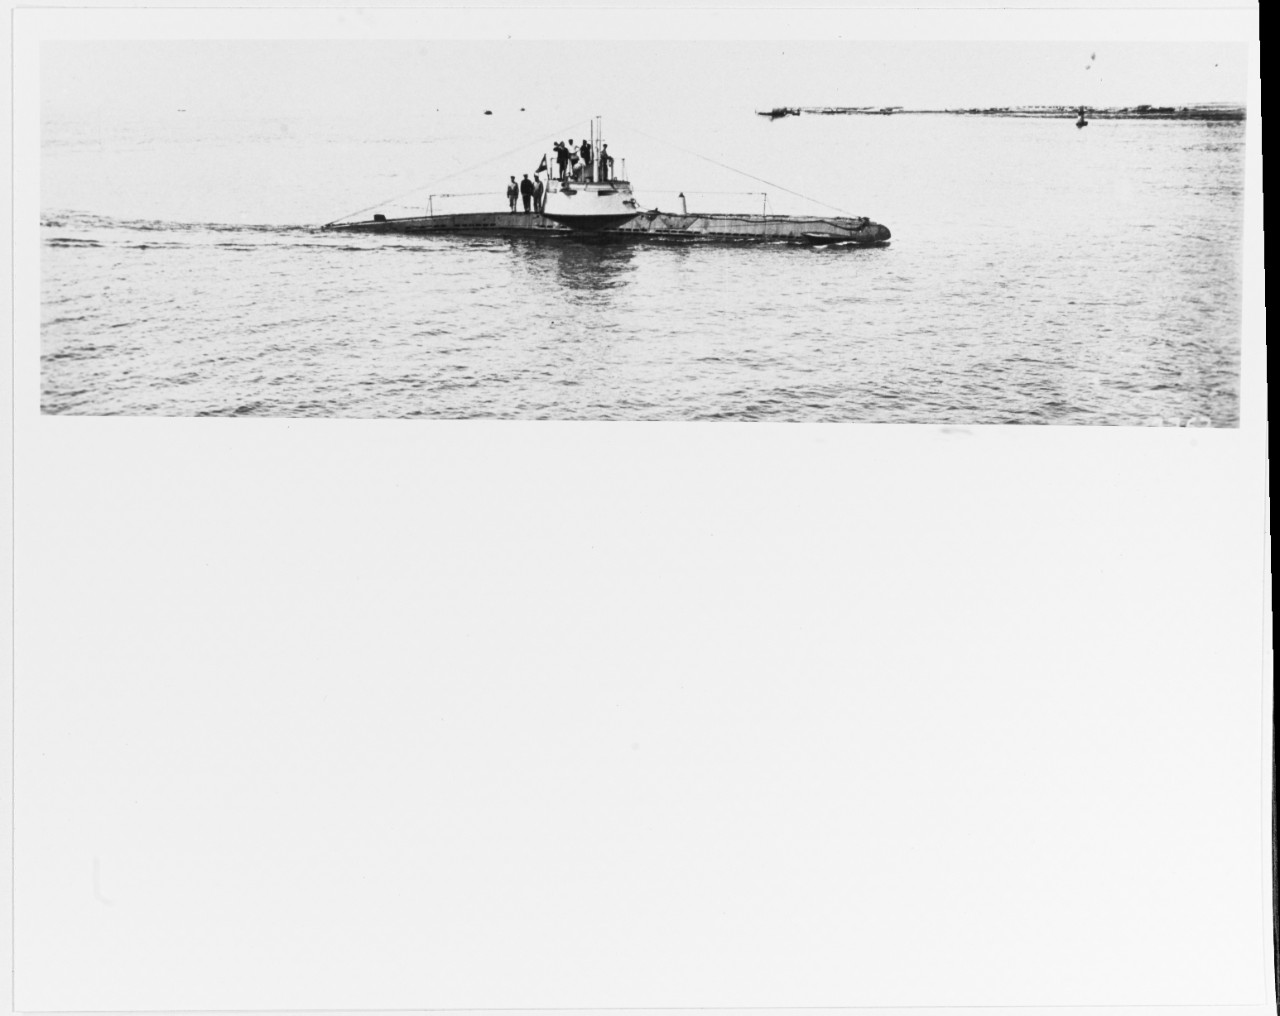 U-15 (Austrian Submarine, 1915-1920)